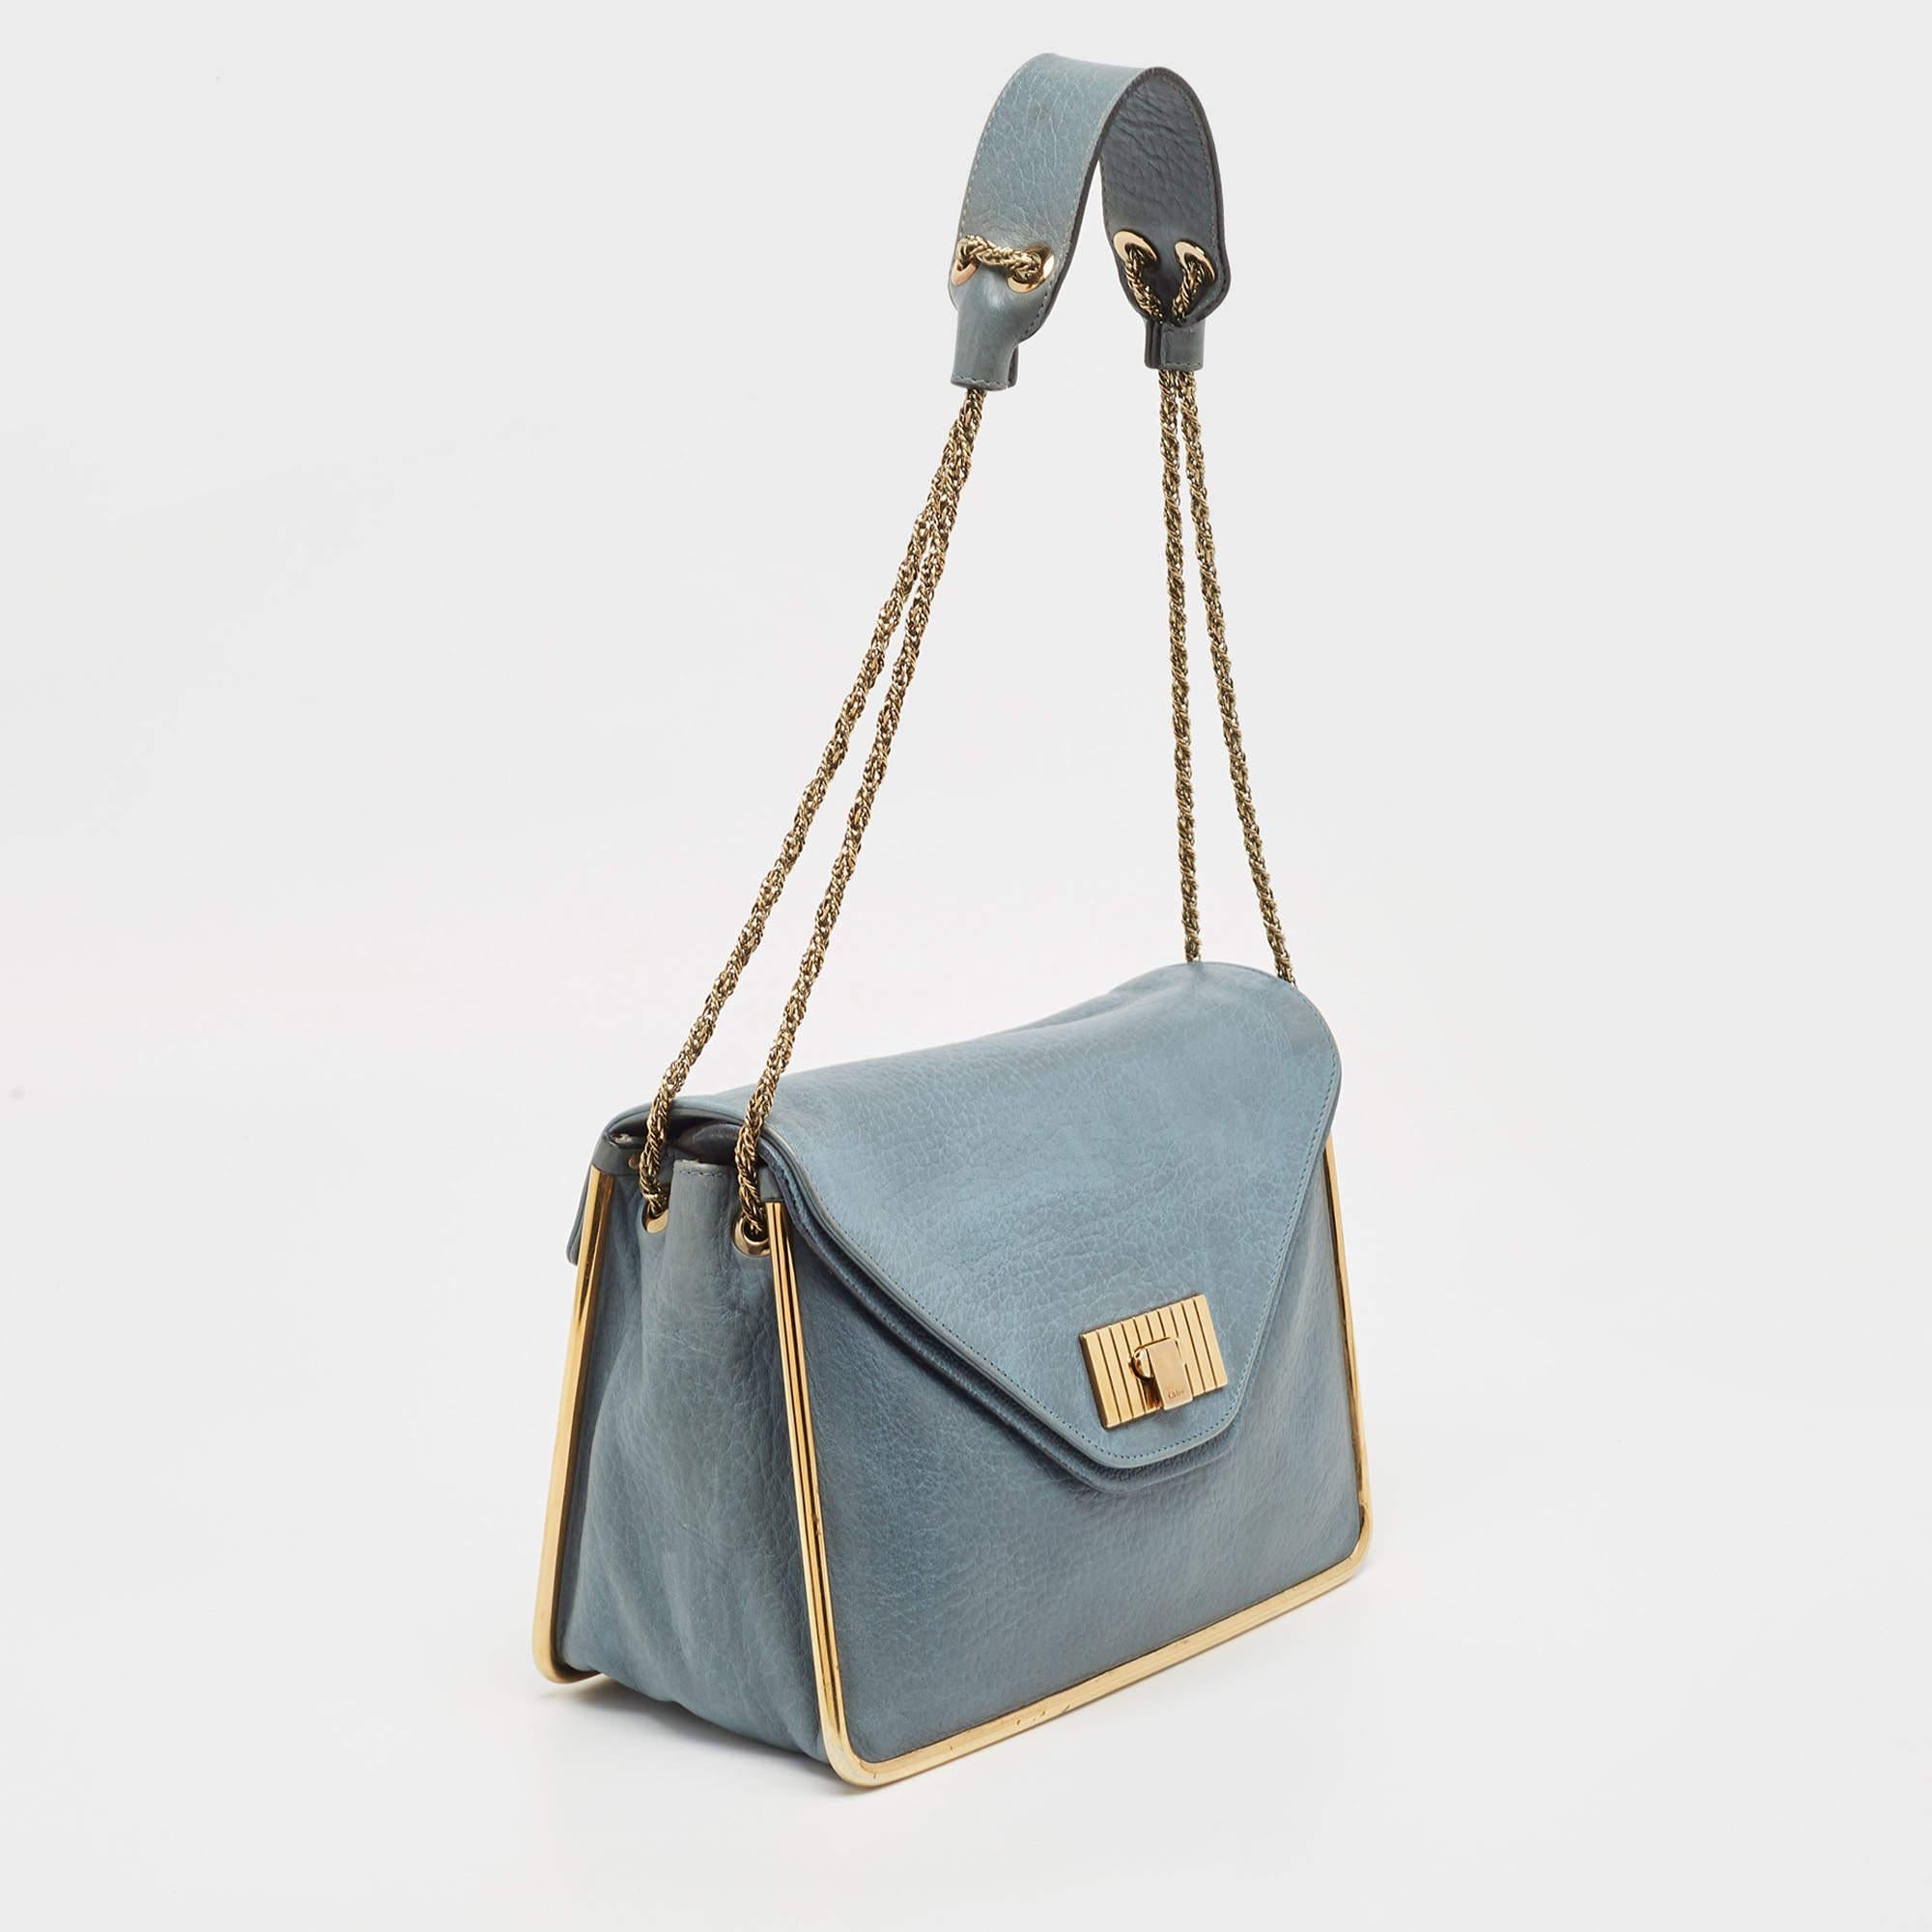 Chloe Blue Leather Medium Sally Shoulder Bag In Good Condition For Sale In Dubai, Al Qouz 2